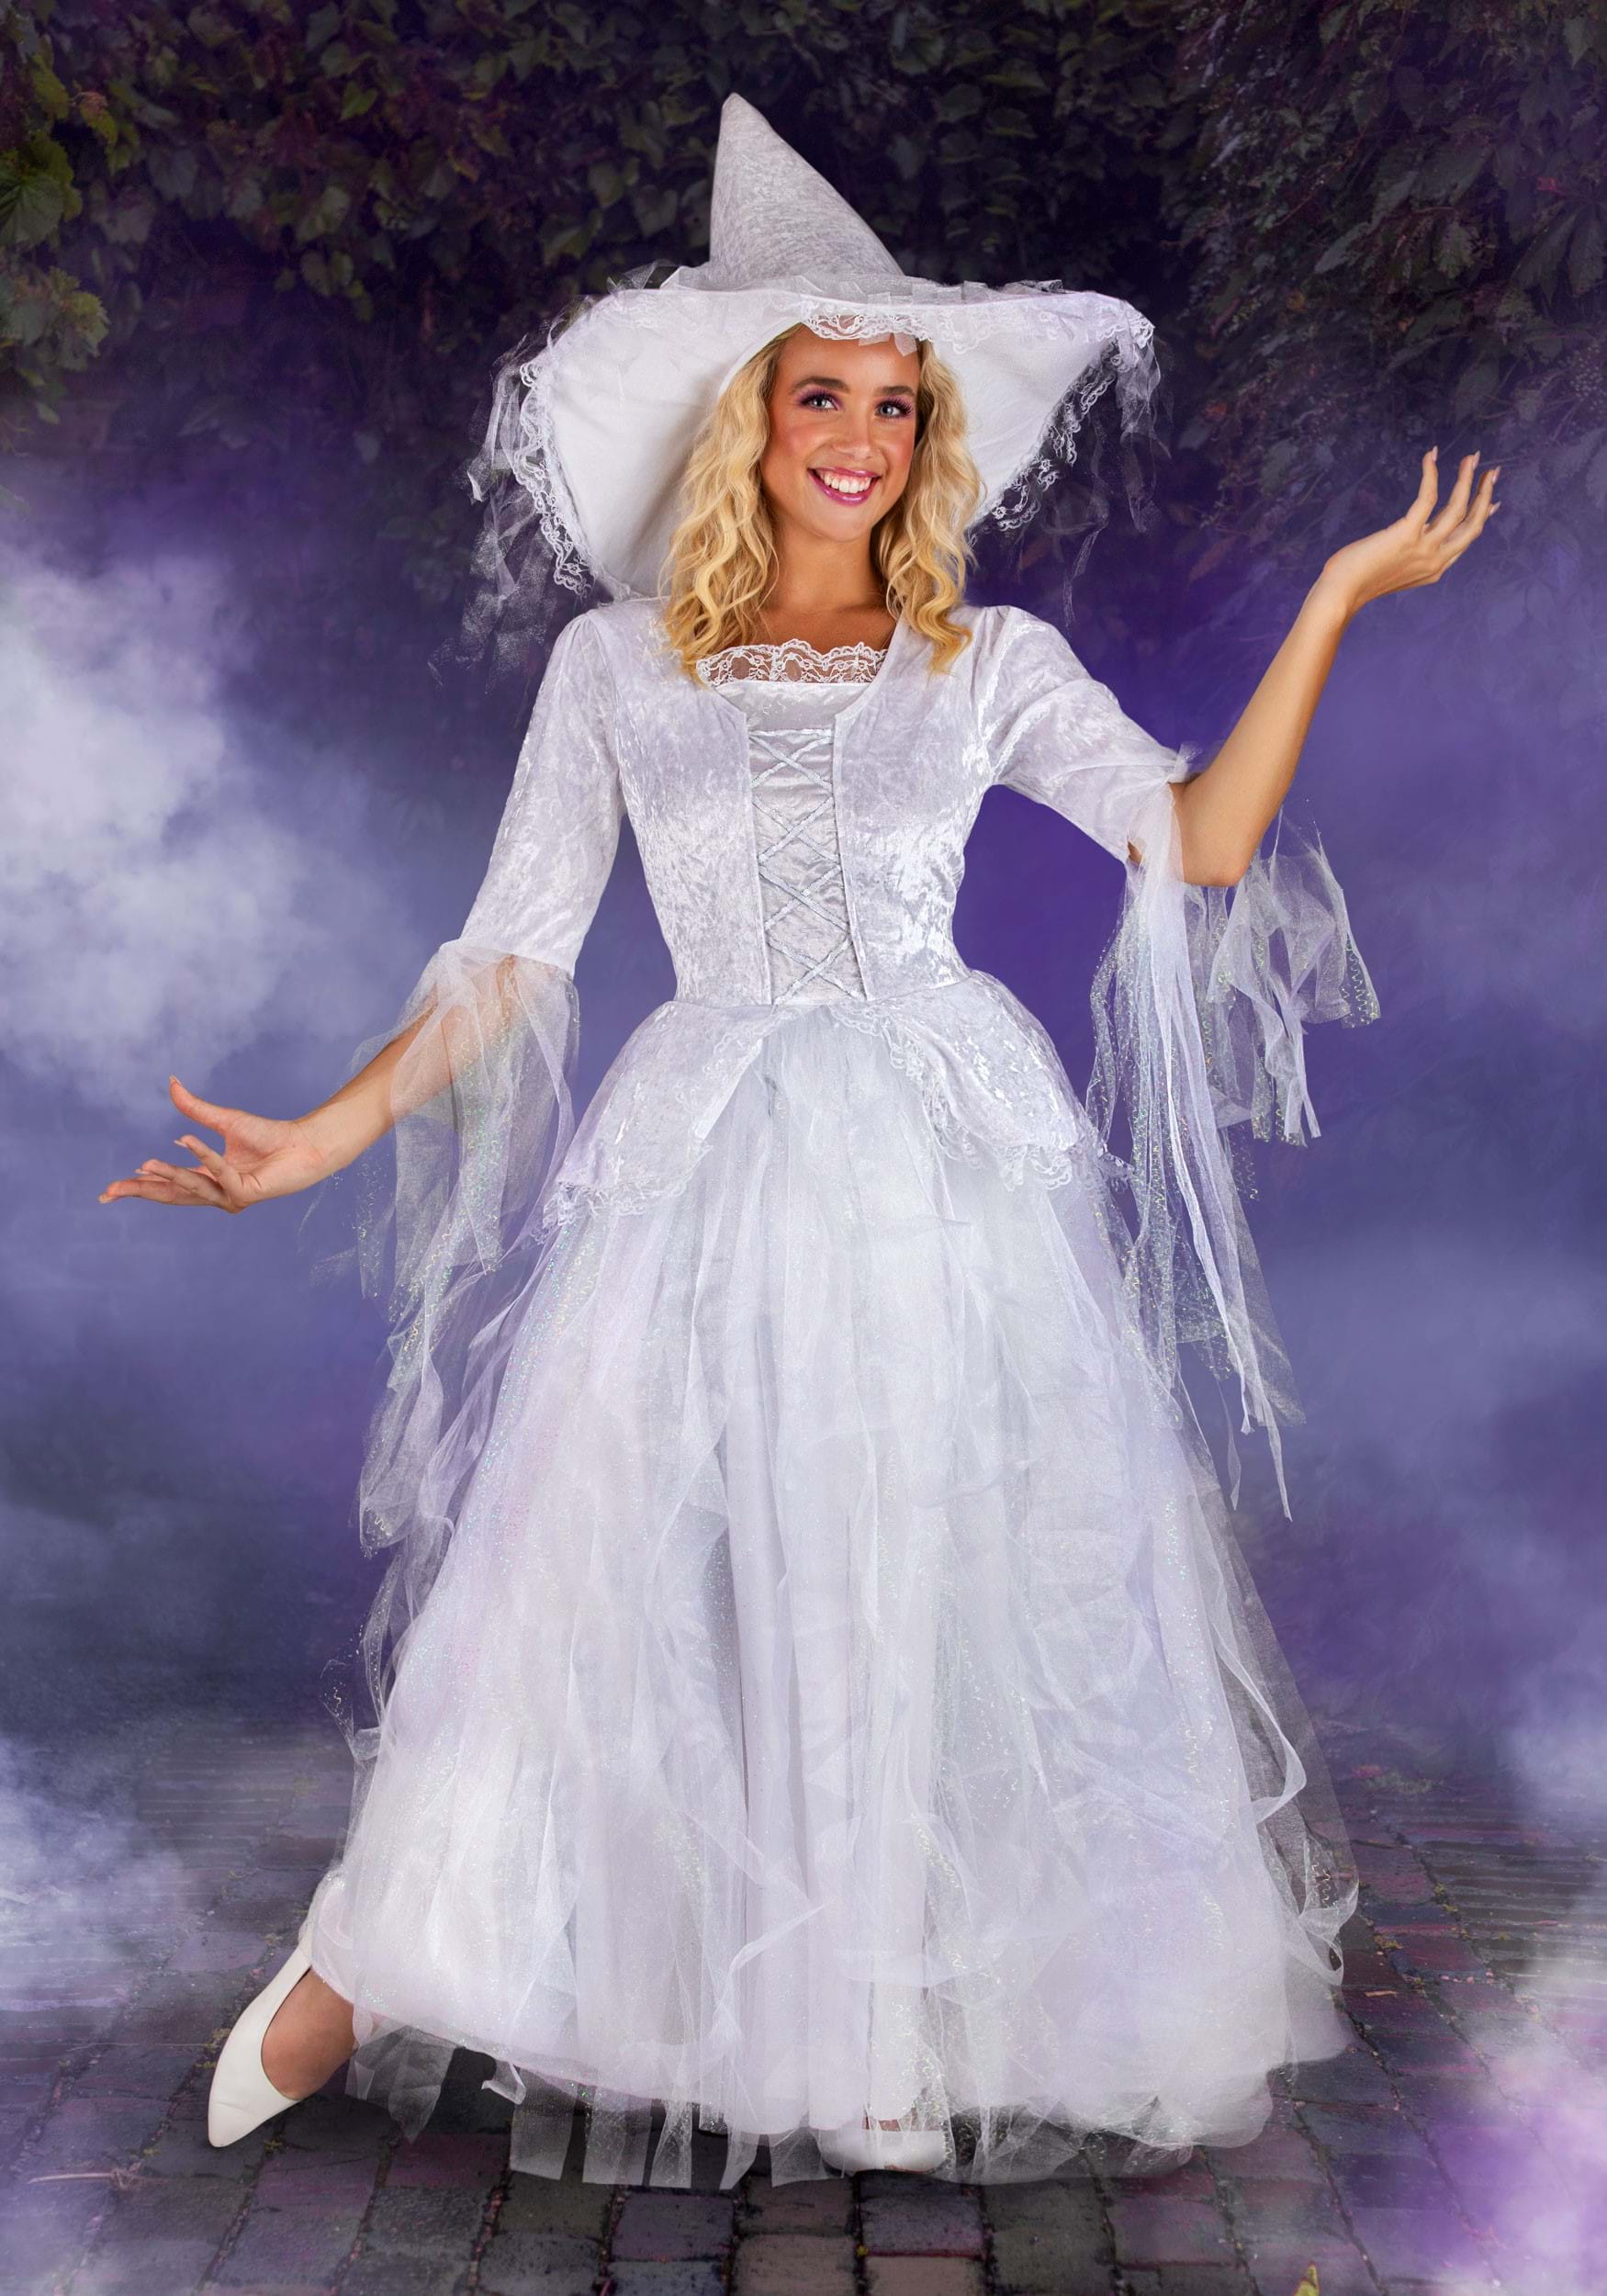 Women's White Witch Costume